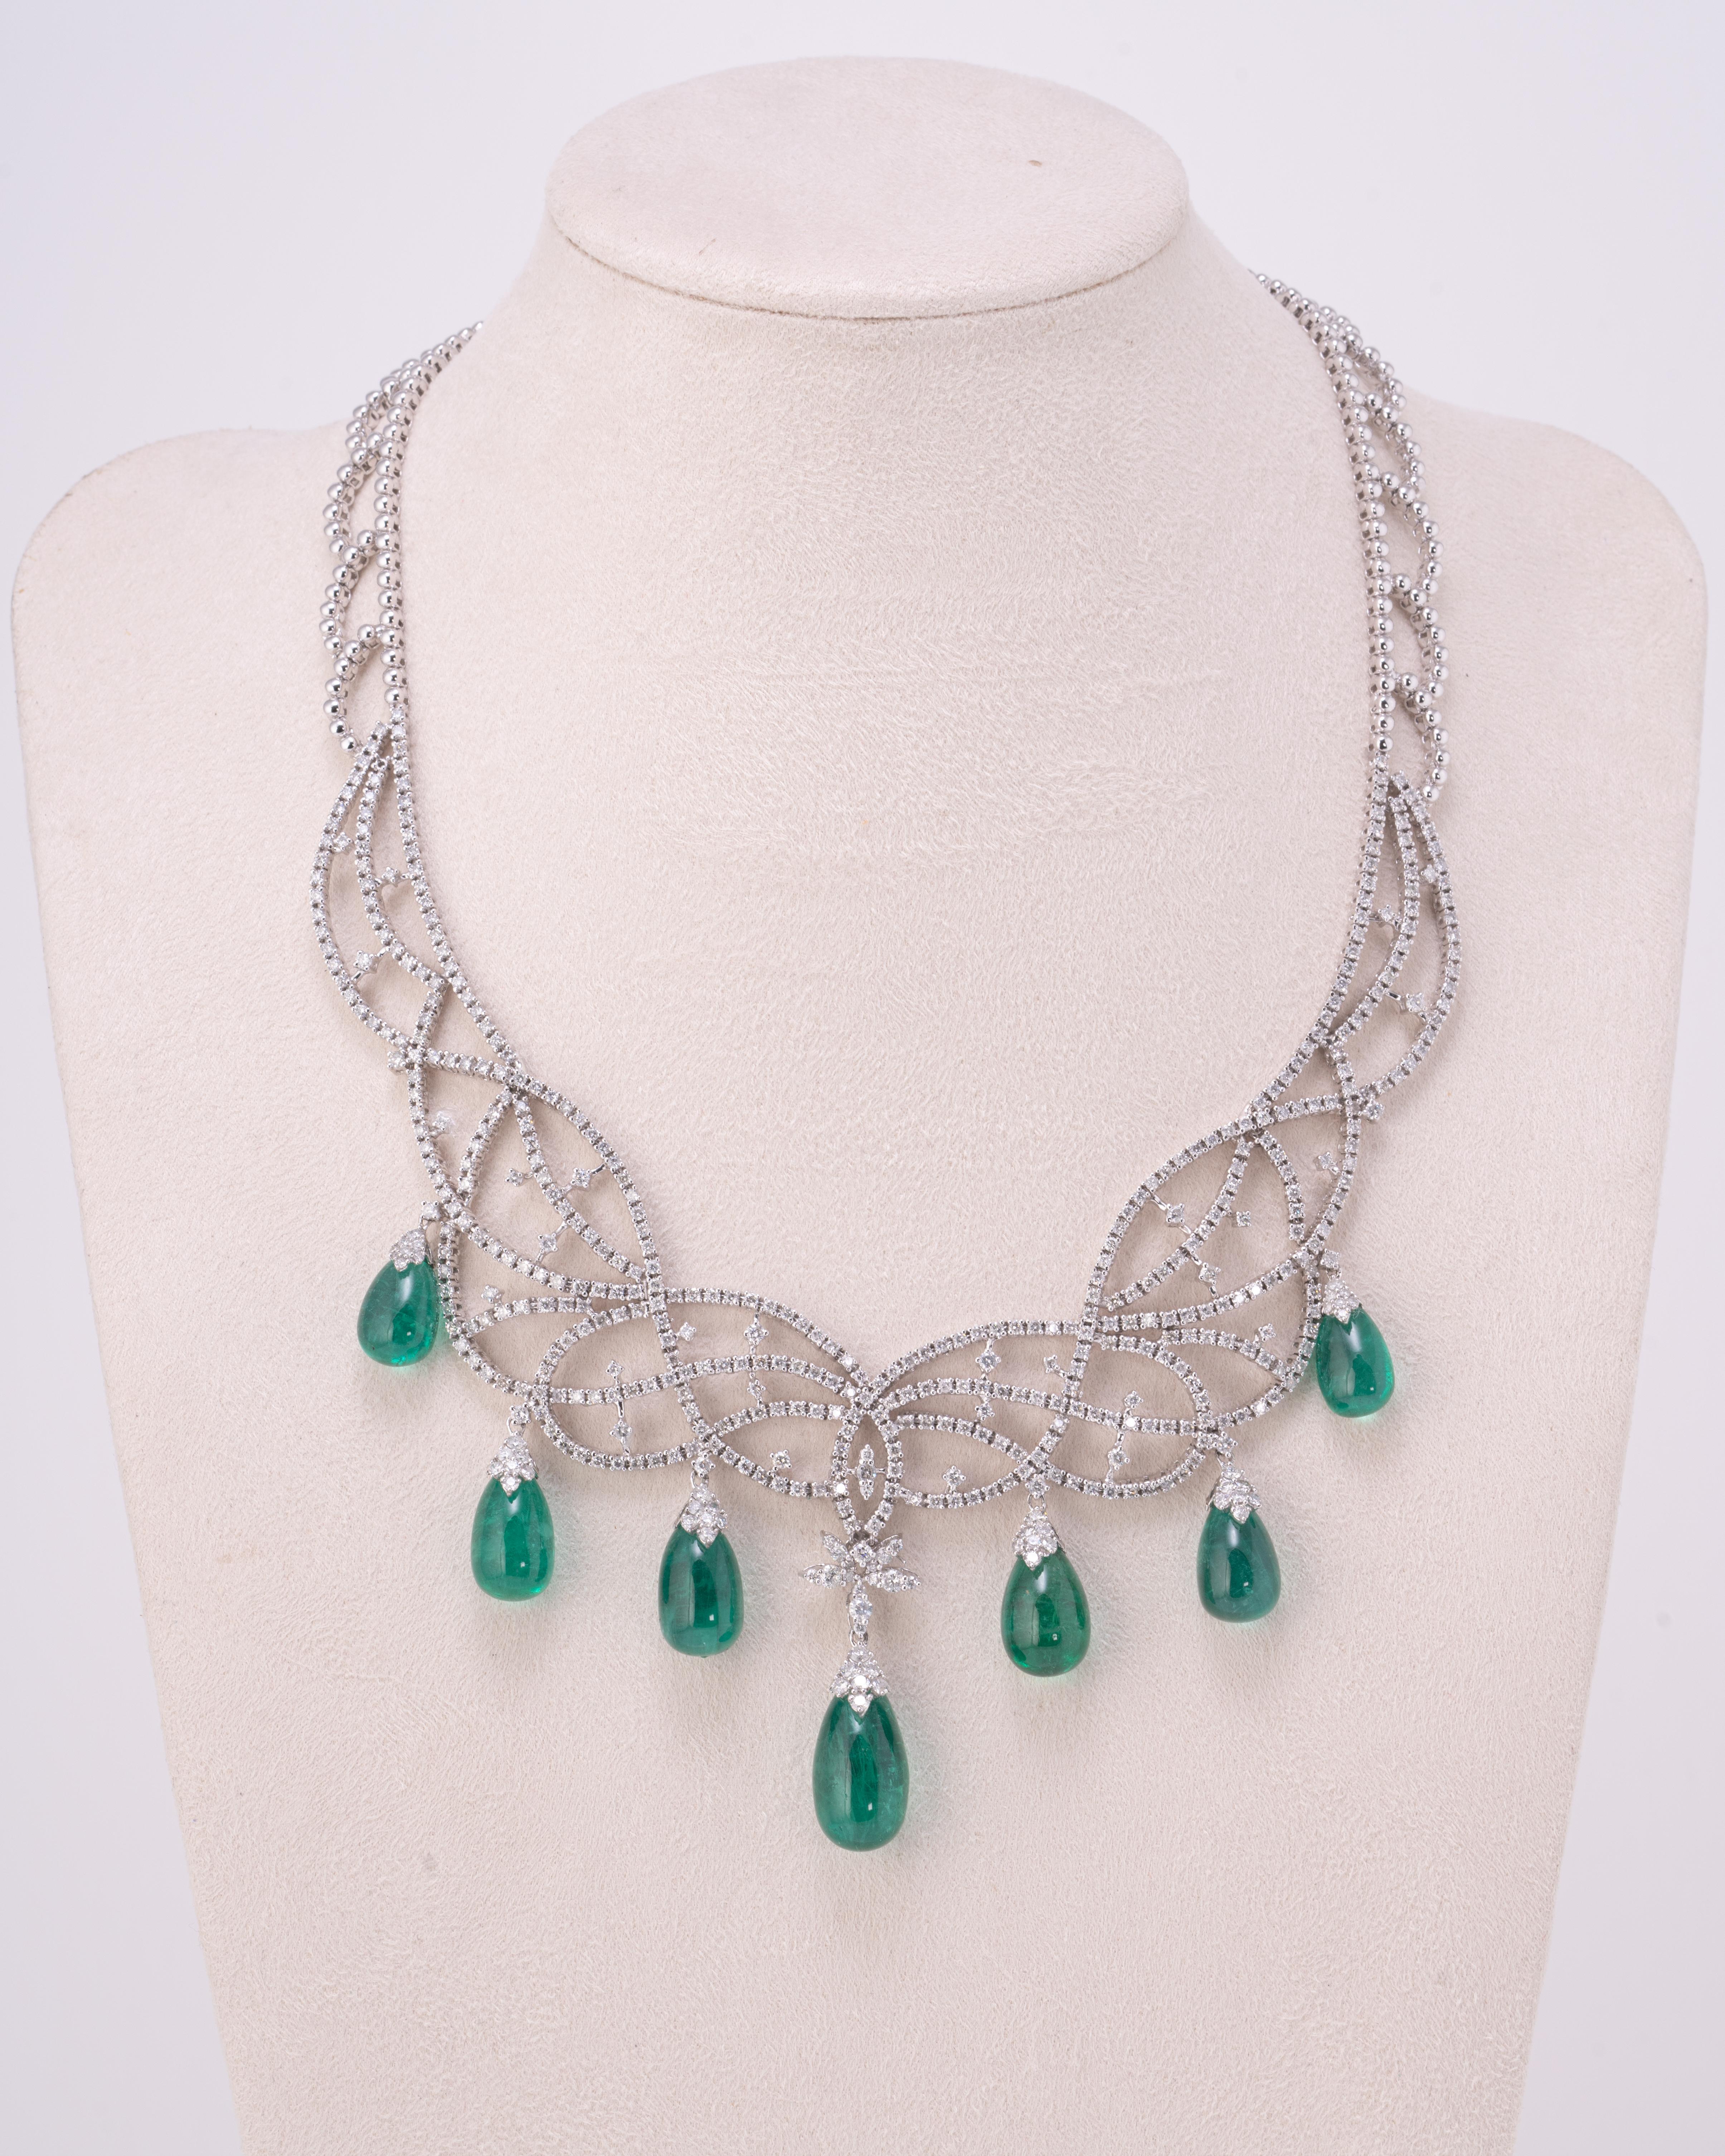 82 Carat Emerald Drops and Diamond 18 Karat Gold Necklace For Sale 1